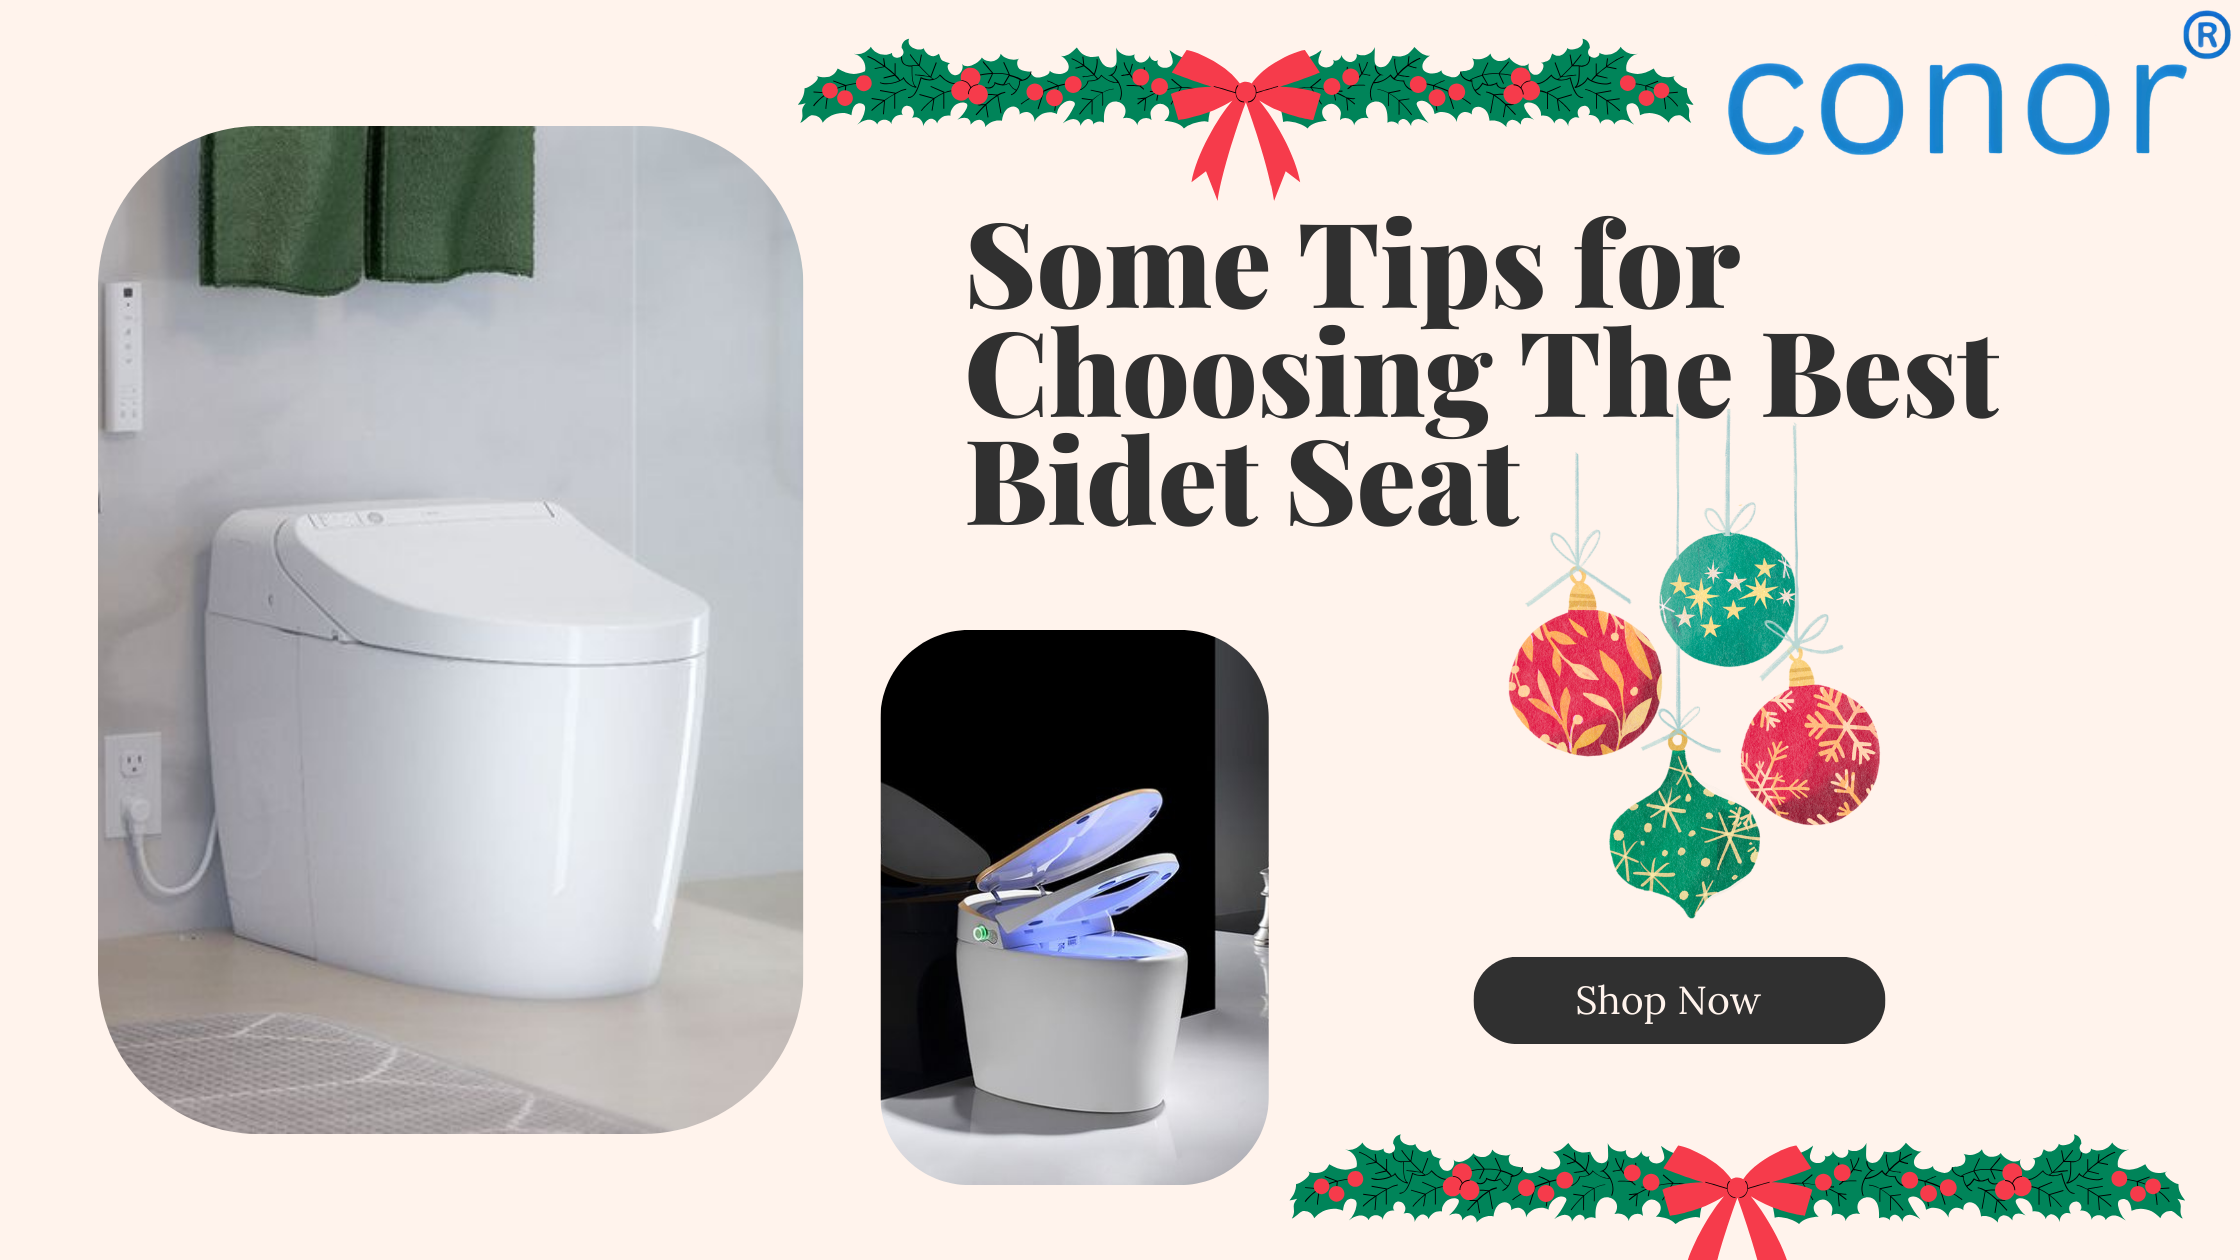 Some tips for choosing the best bidet seat